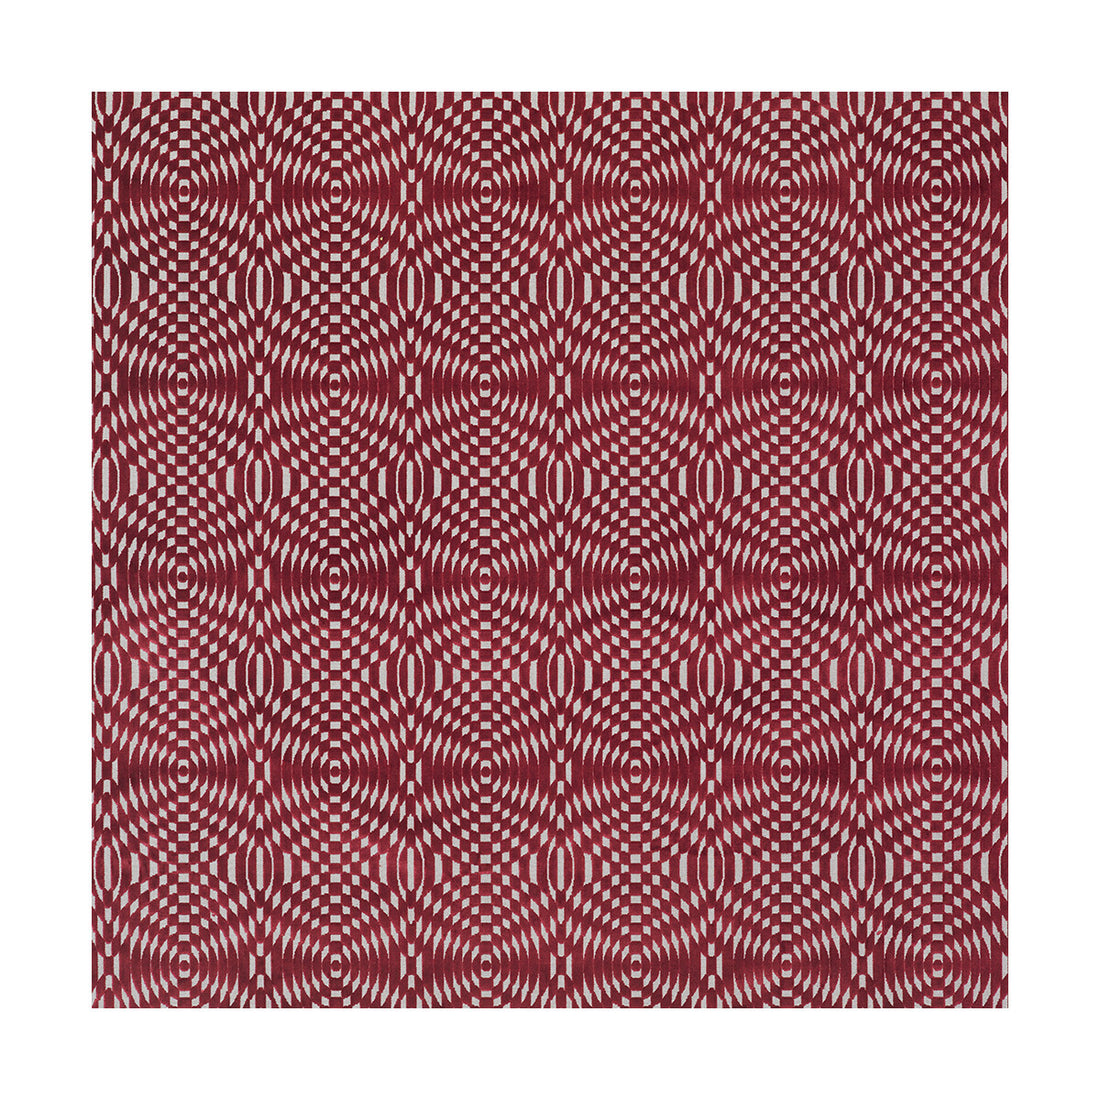 Carlinos fabric in rojo color - pattern LCT5360.001.0 - by Gaston y Daniela in the Lorenzo Castillo III collection